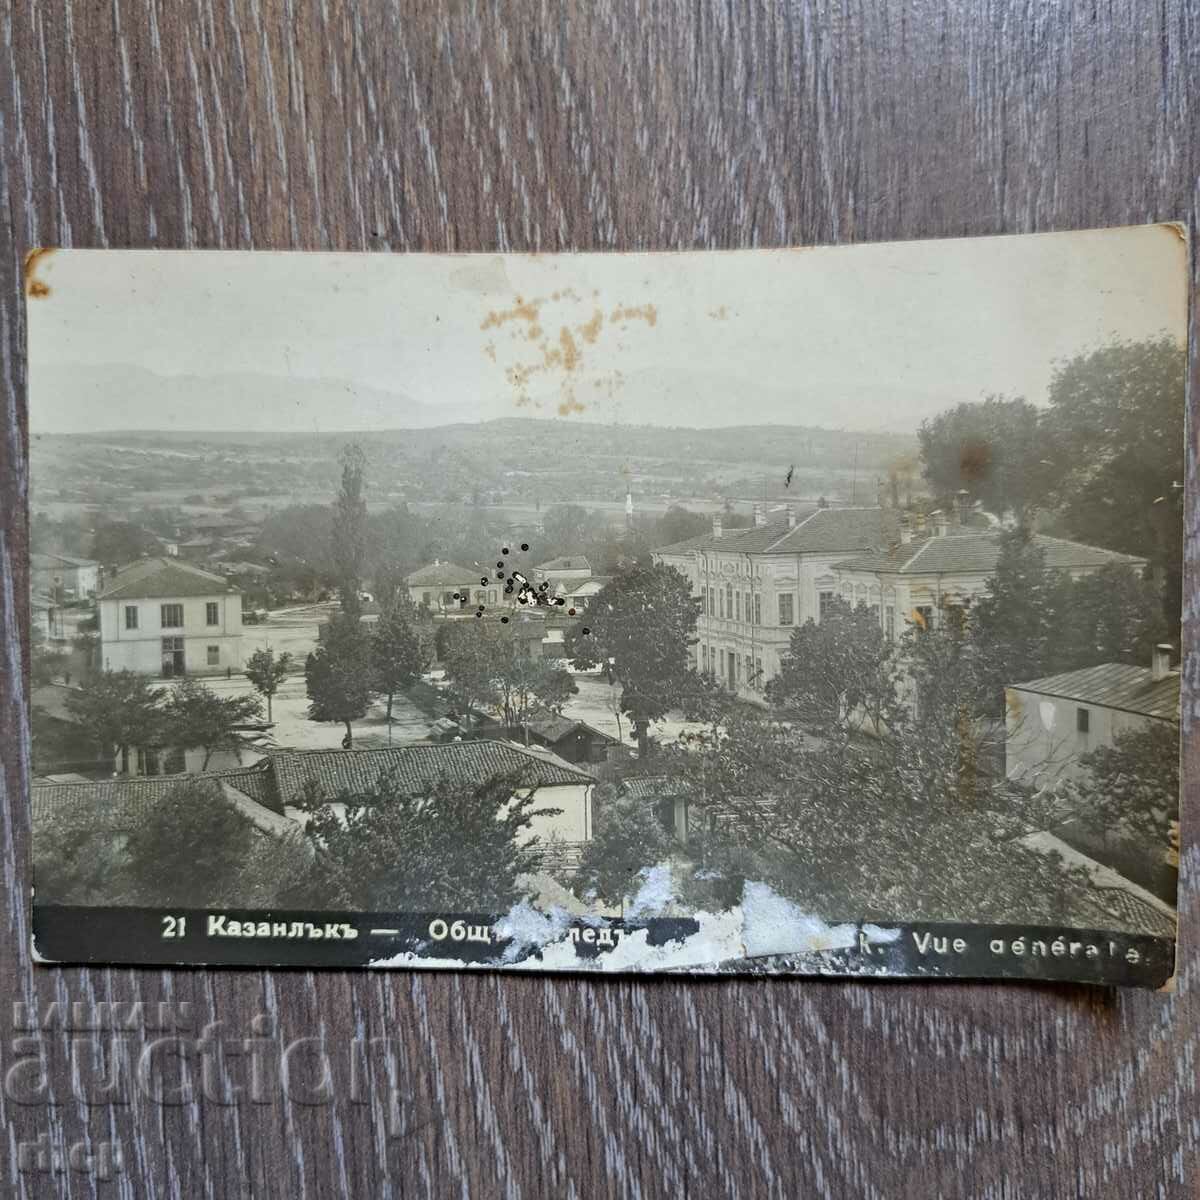 Kazanlak 1933 παλιά καρτέλα με εικόνες